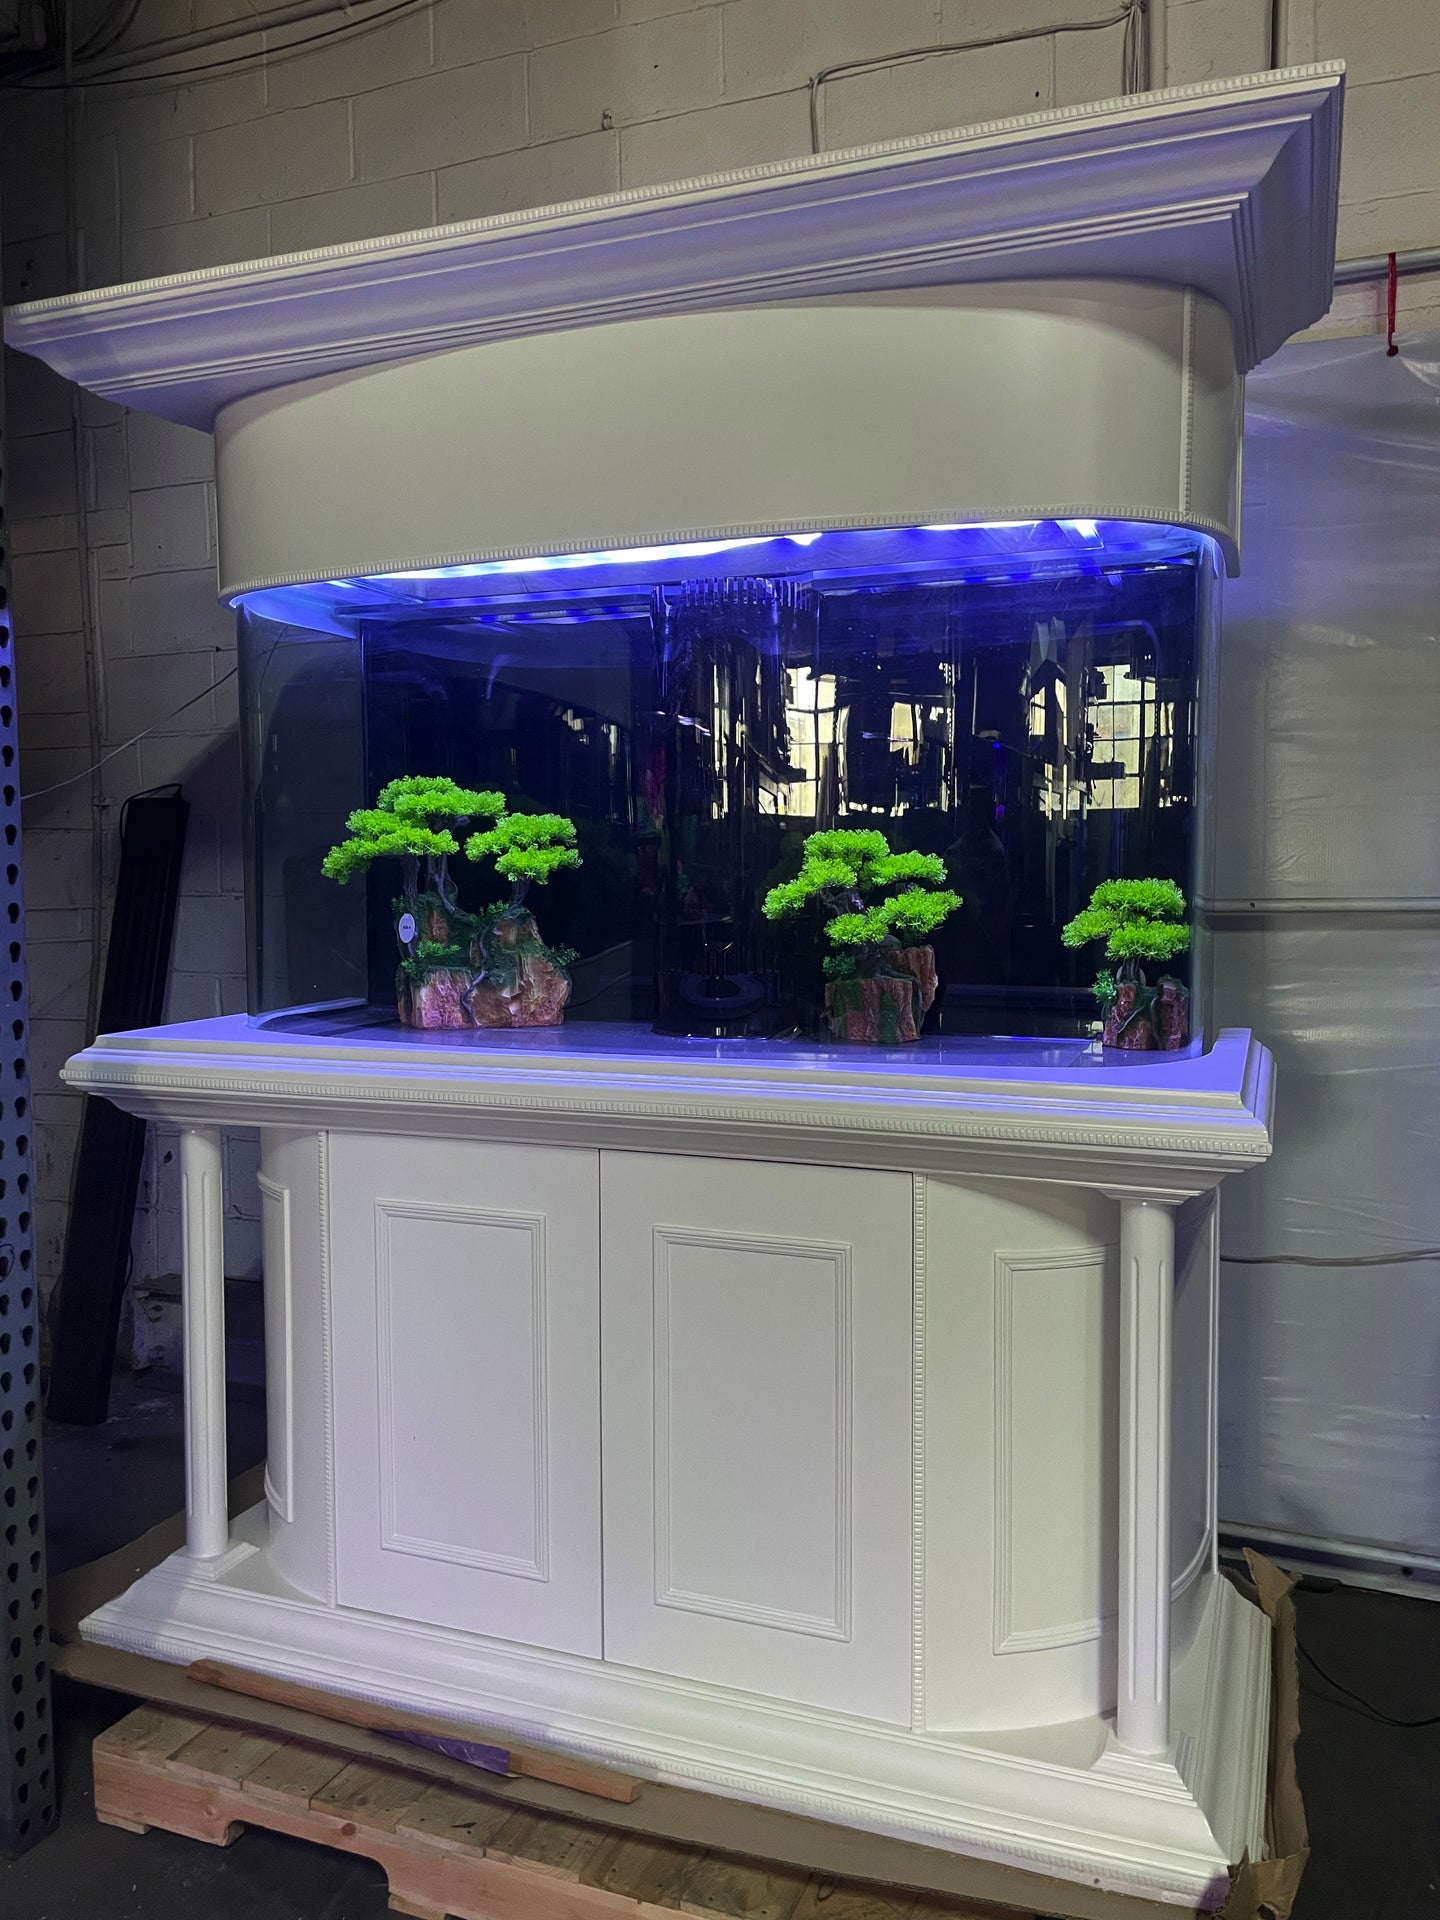 RARE AQUARIUM! Warranty included 170 gallon GLASS bow front aquarium fish tank